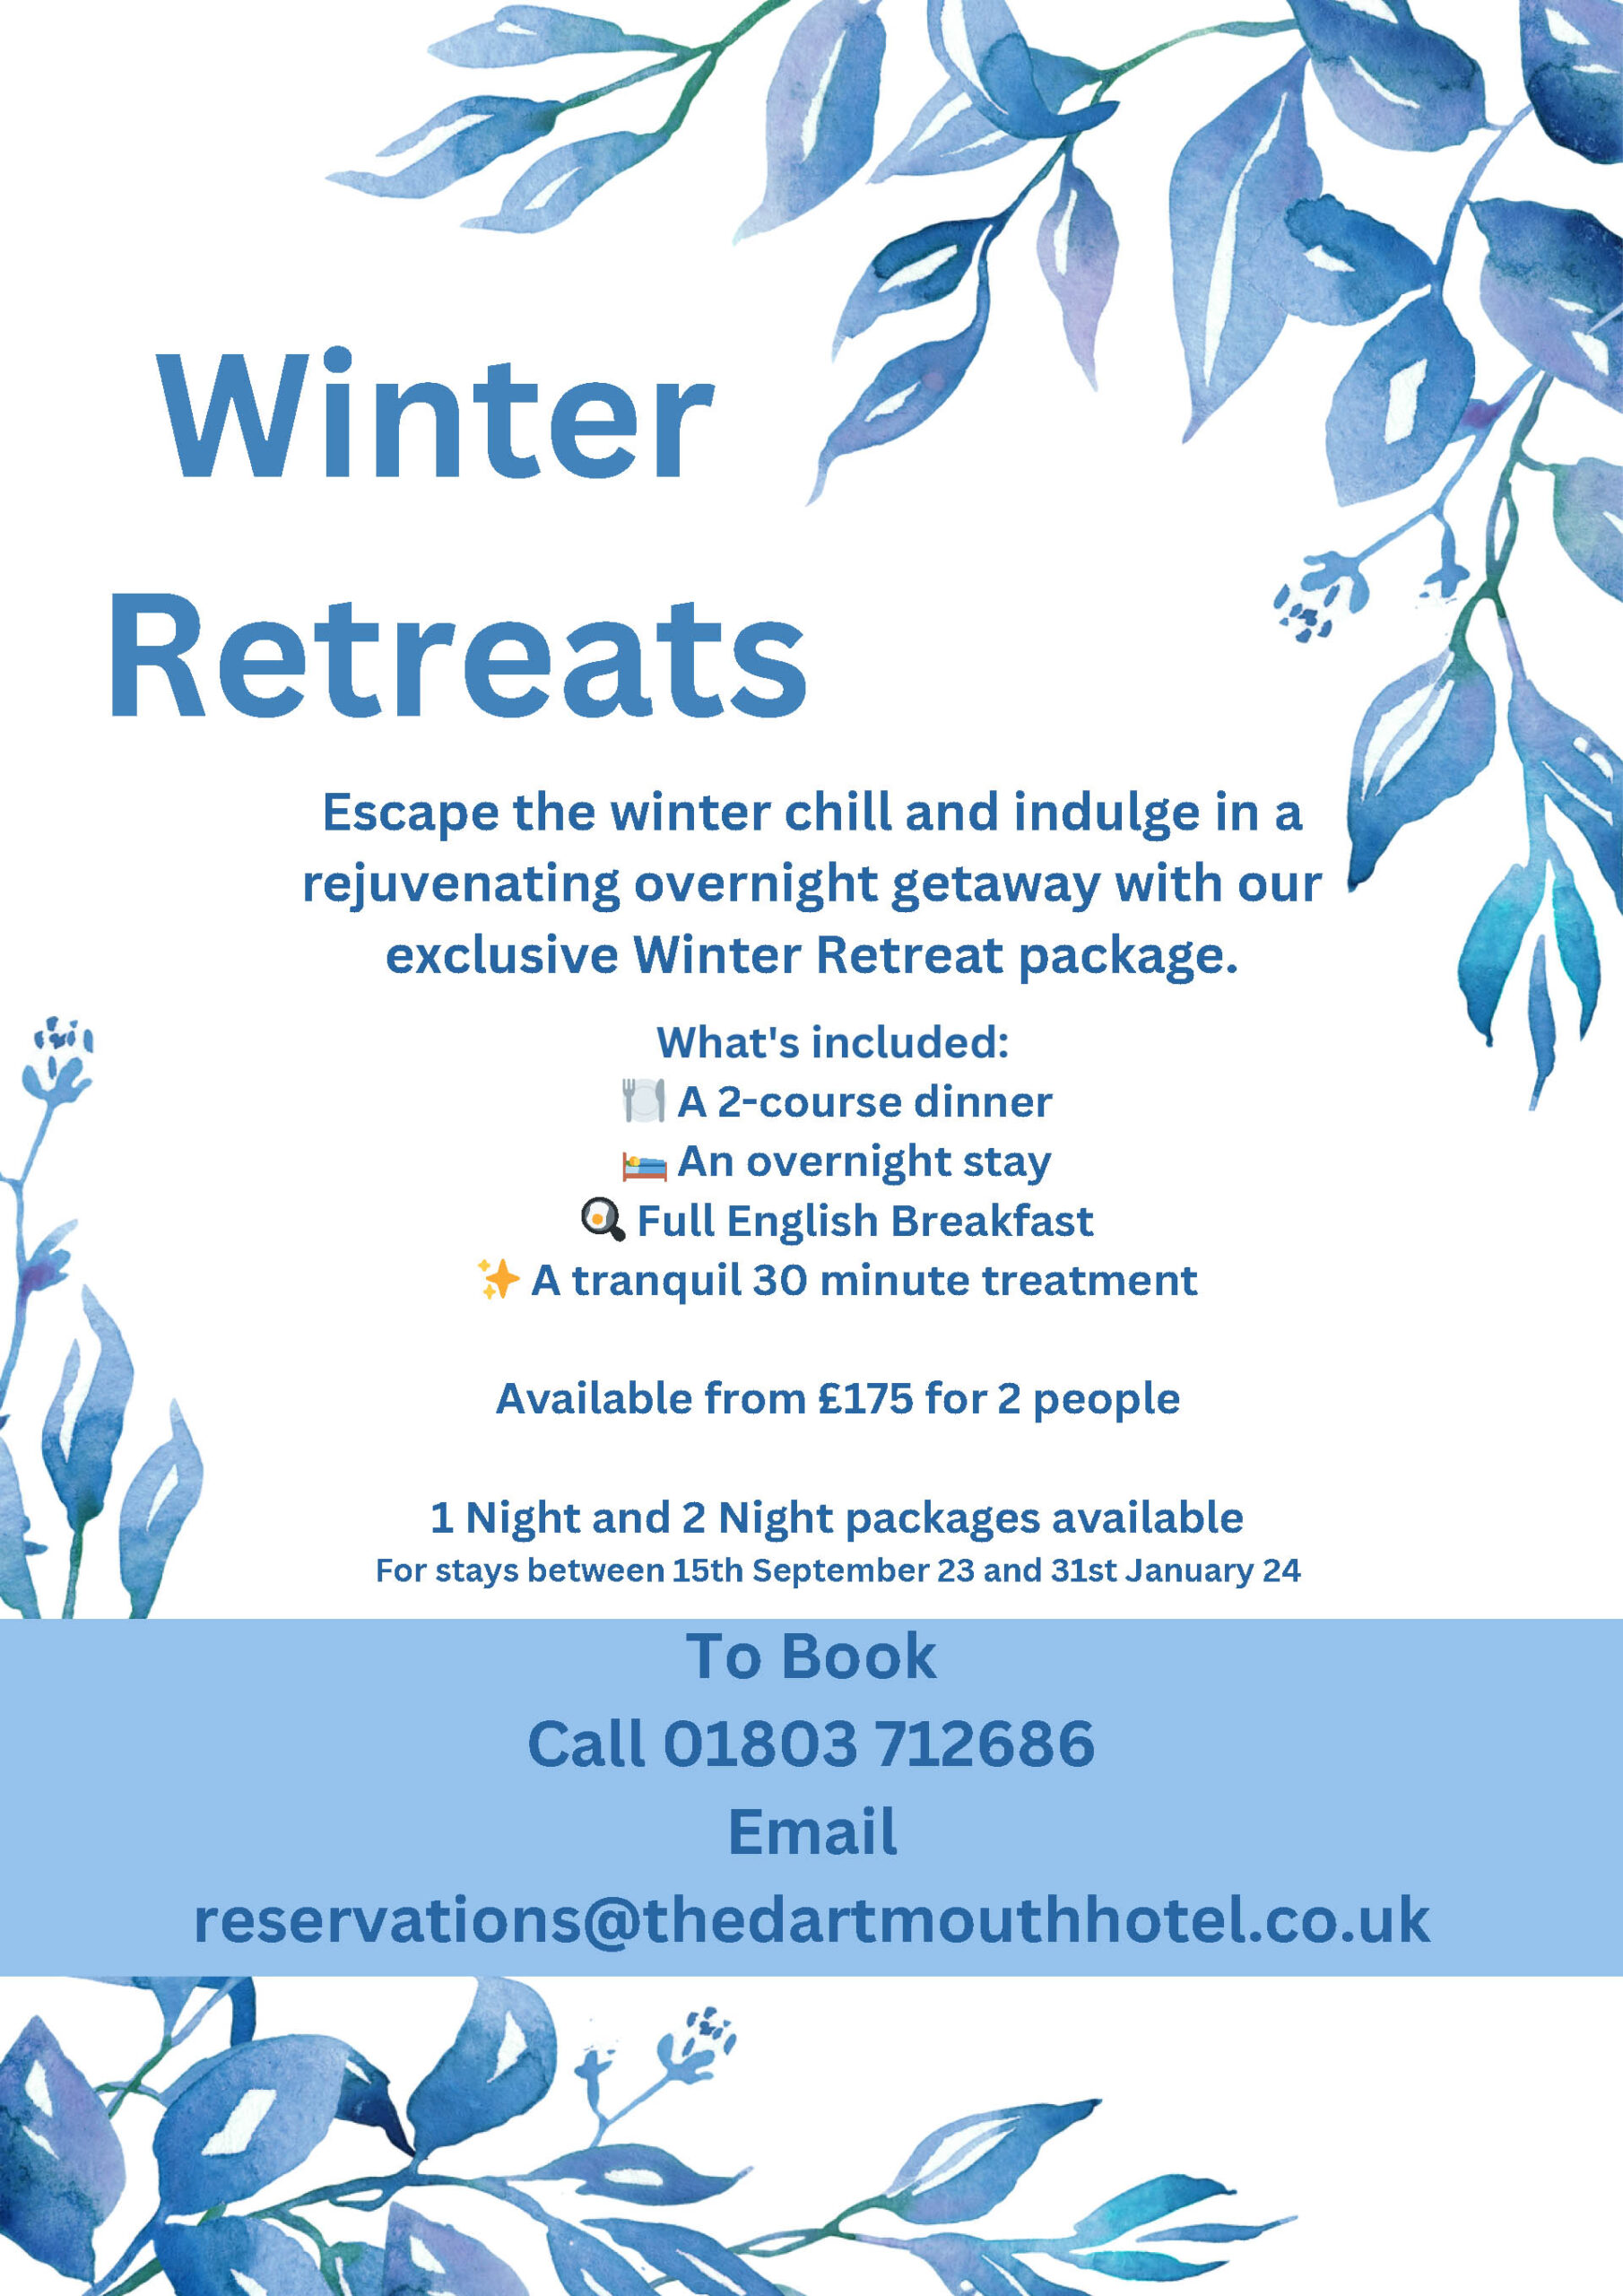 Winter Retreats at the Dartmouth Hotel Golf & Spa